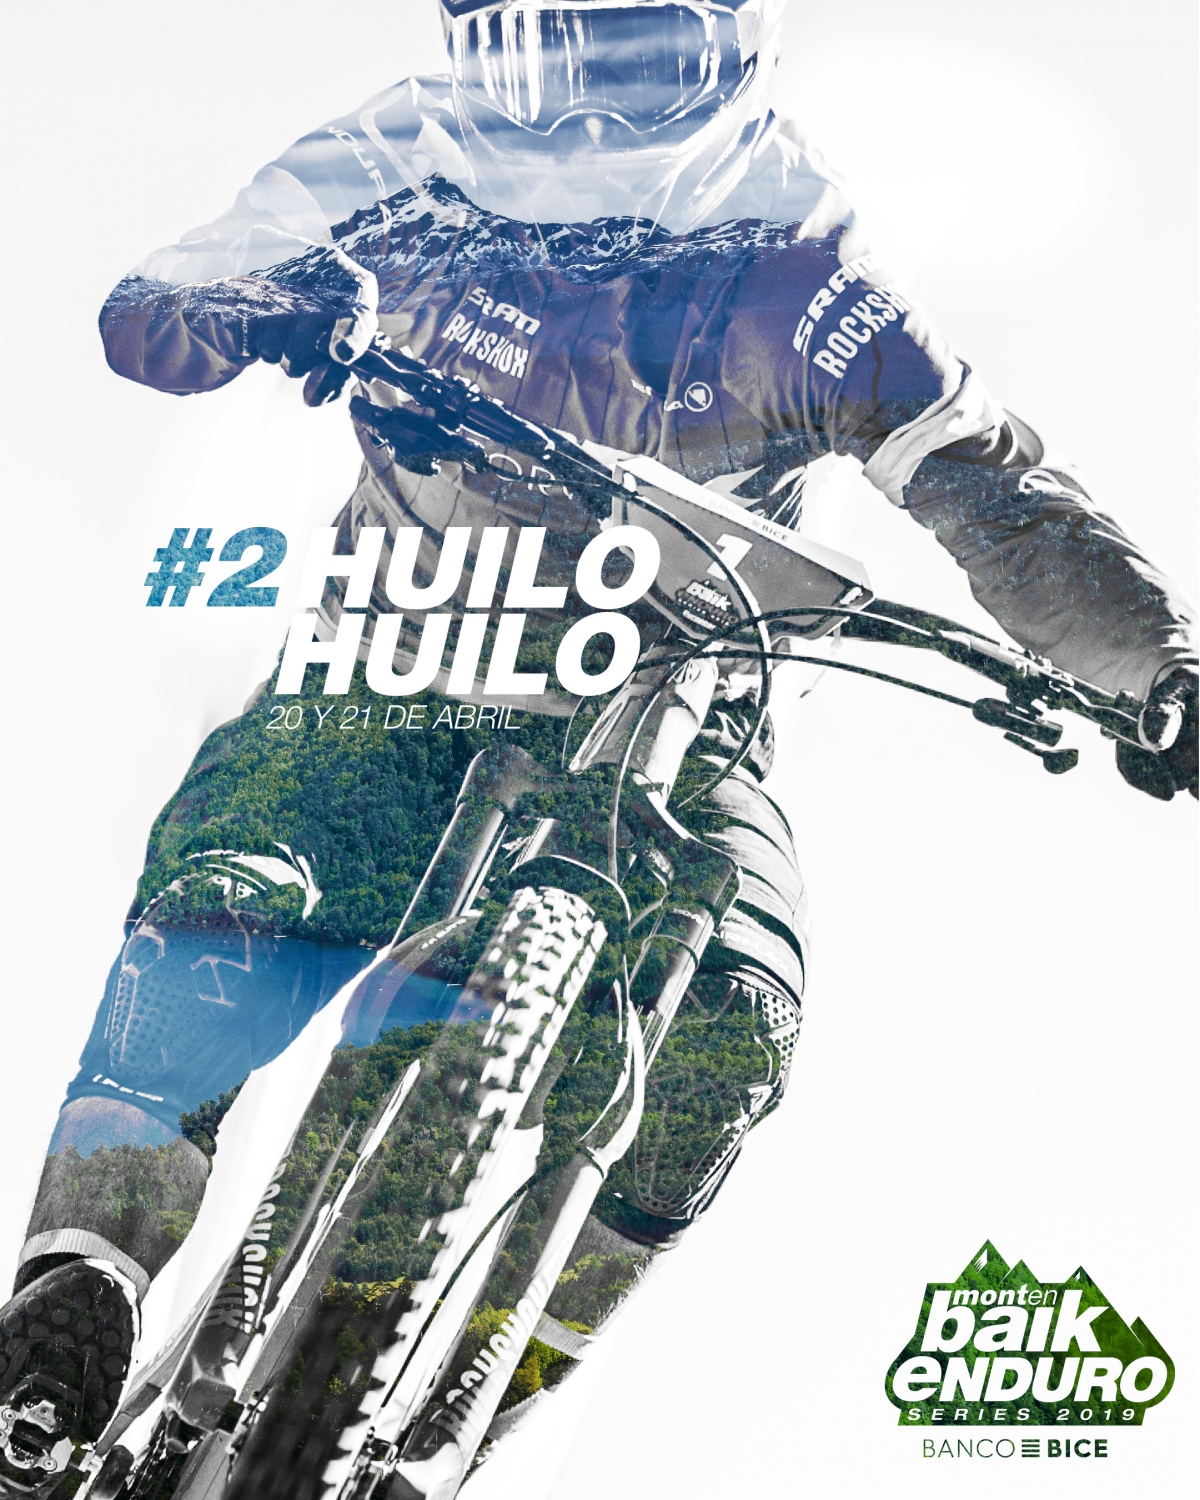 #2 Huilo Huilo - Montenbaik Enduro Series by Banco Bice 2019